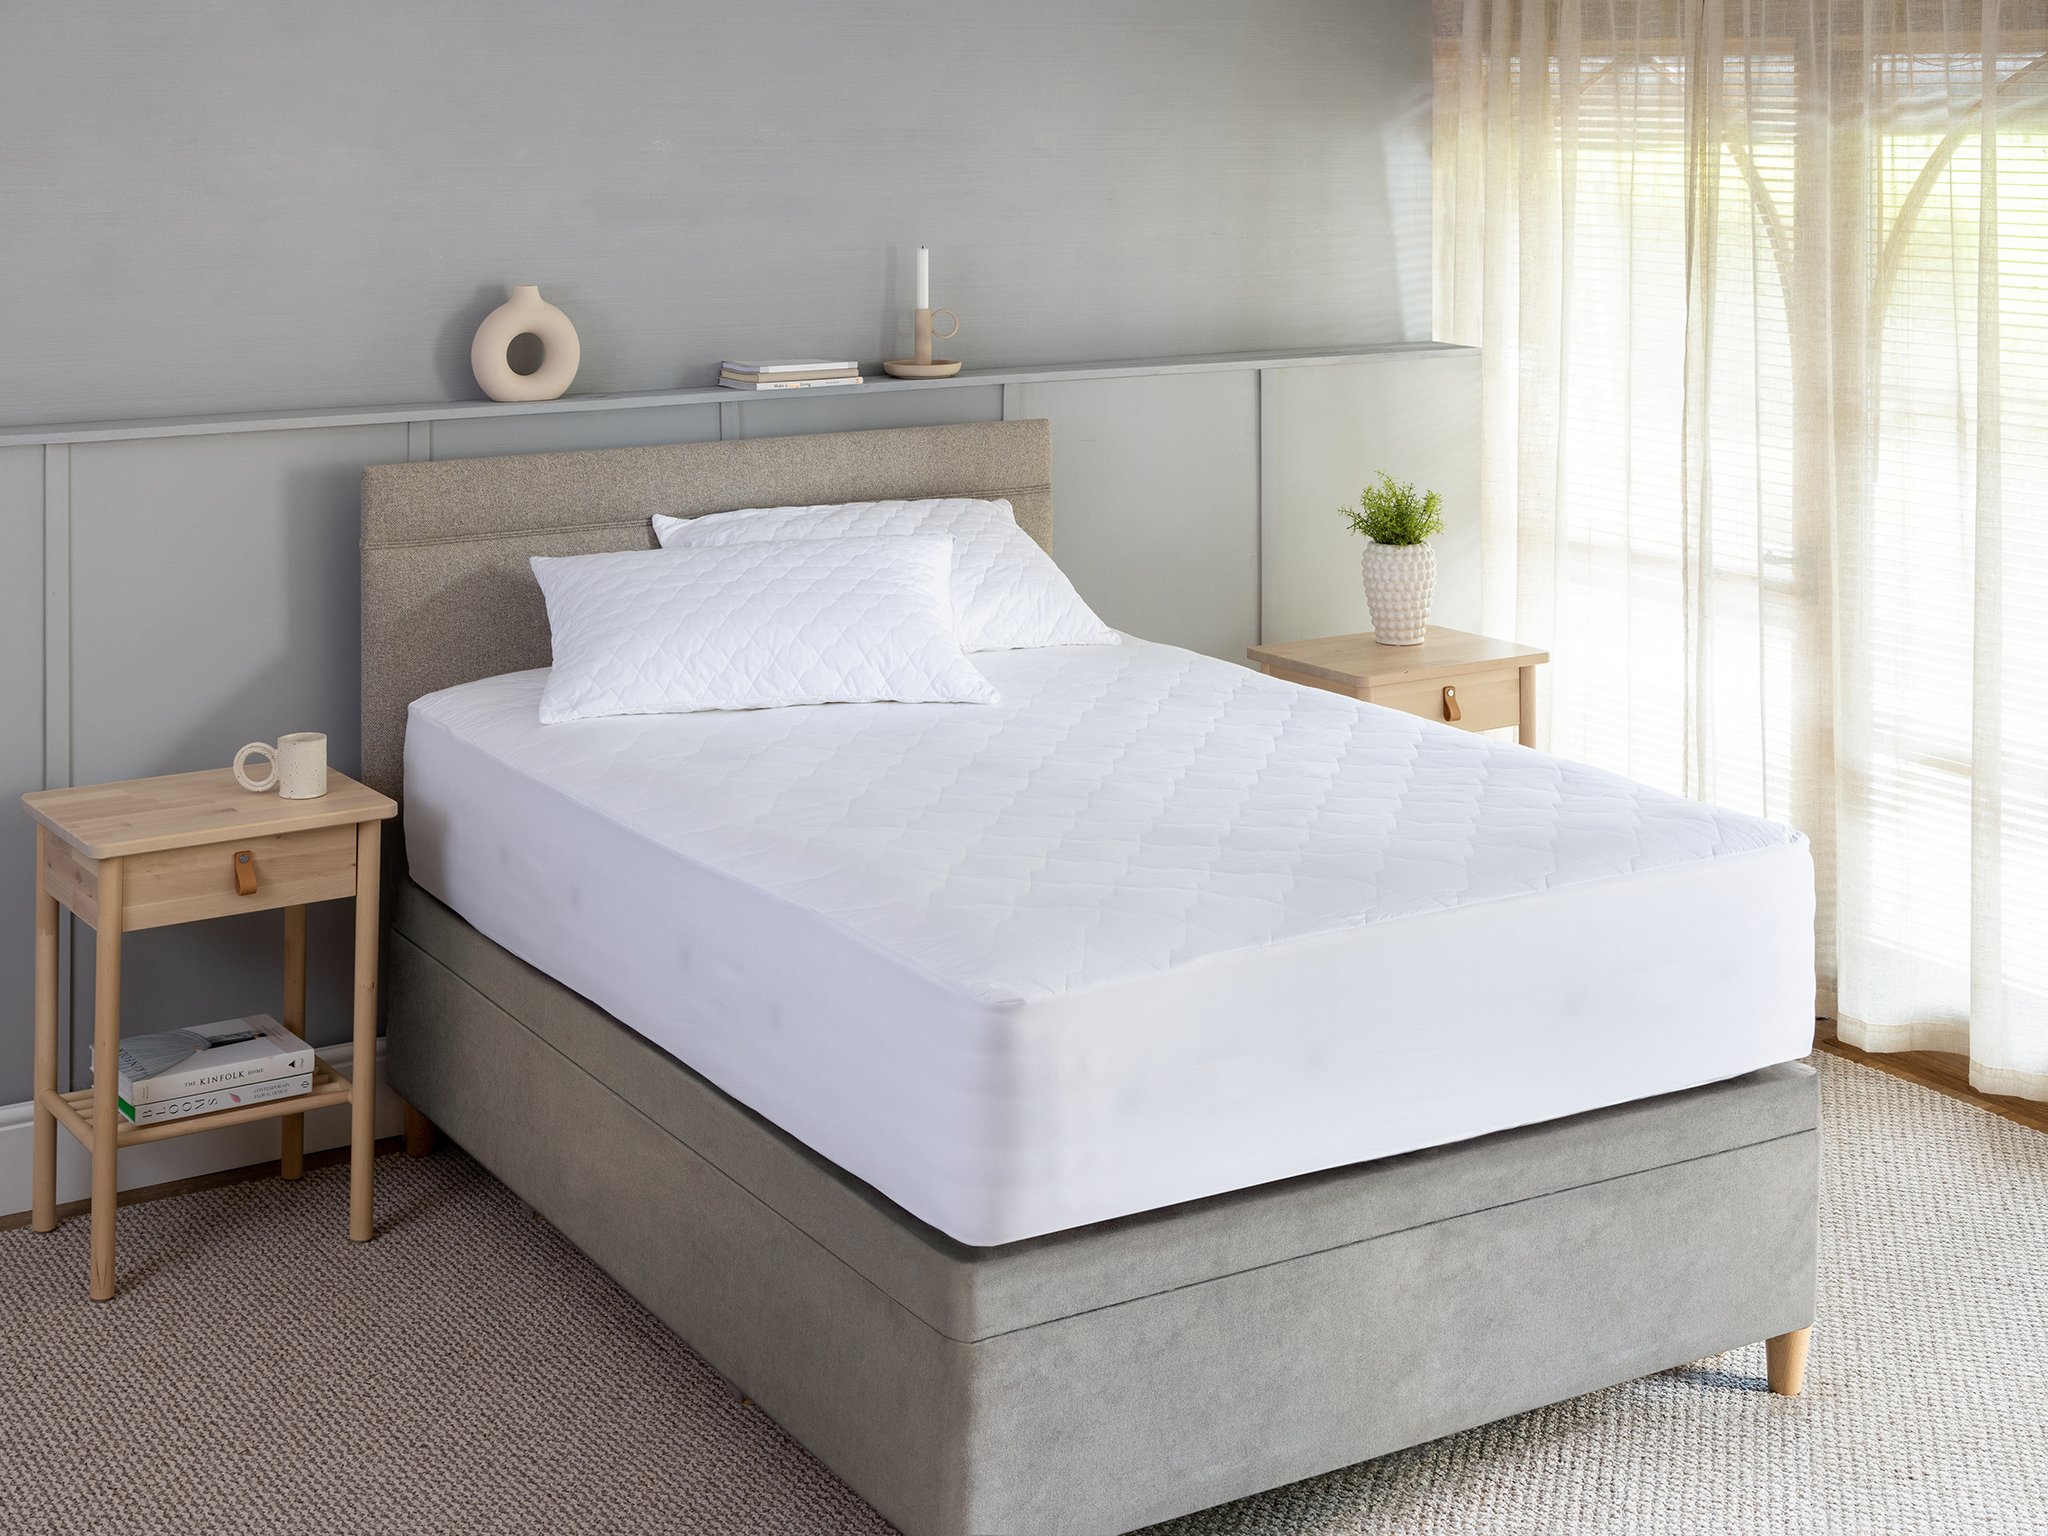 Soak & Sleep luxury quilted cotton mattress protector